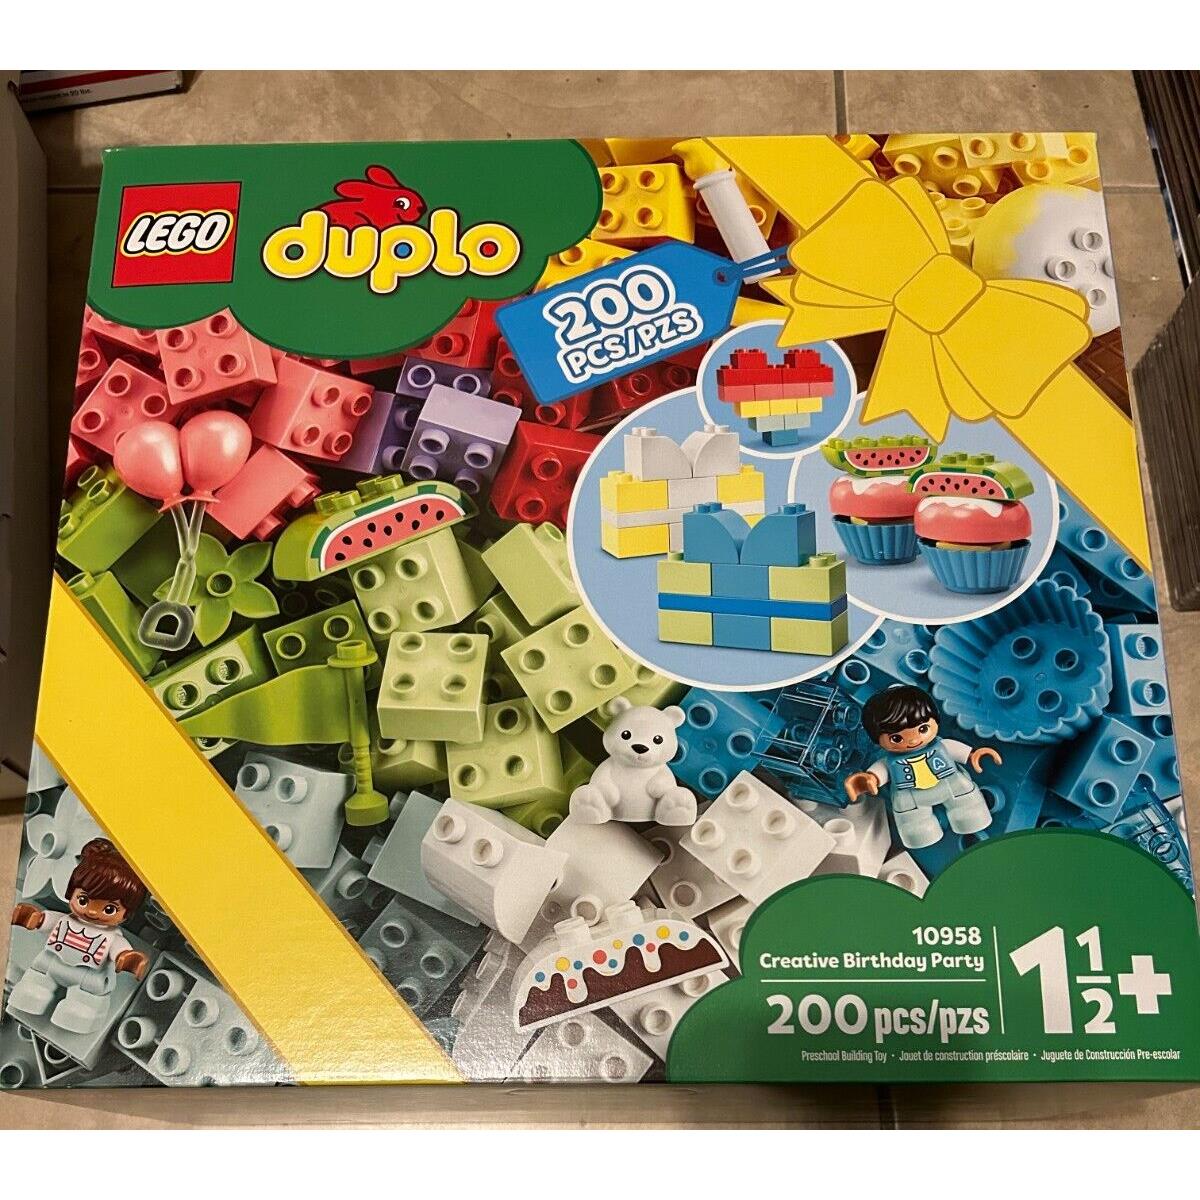 Lego Duplo 10958 Creative Birthday Party Set